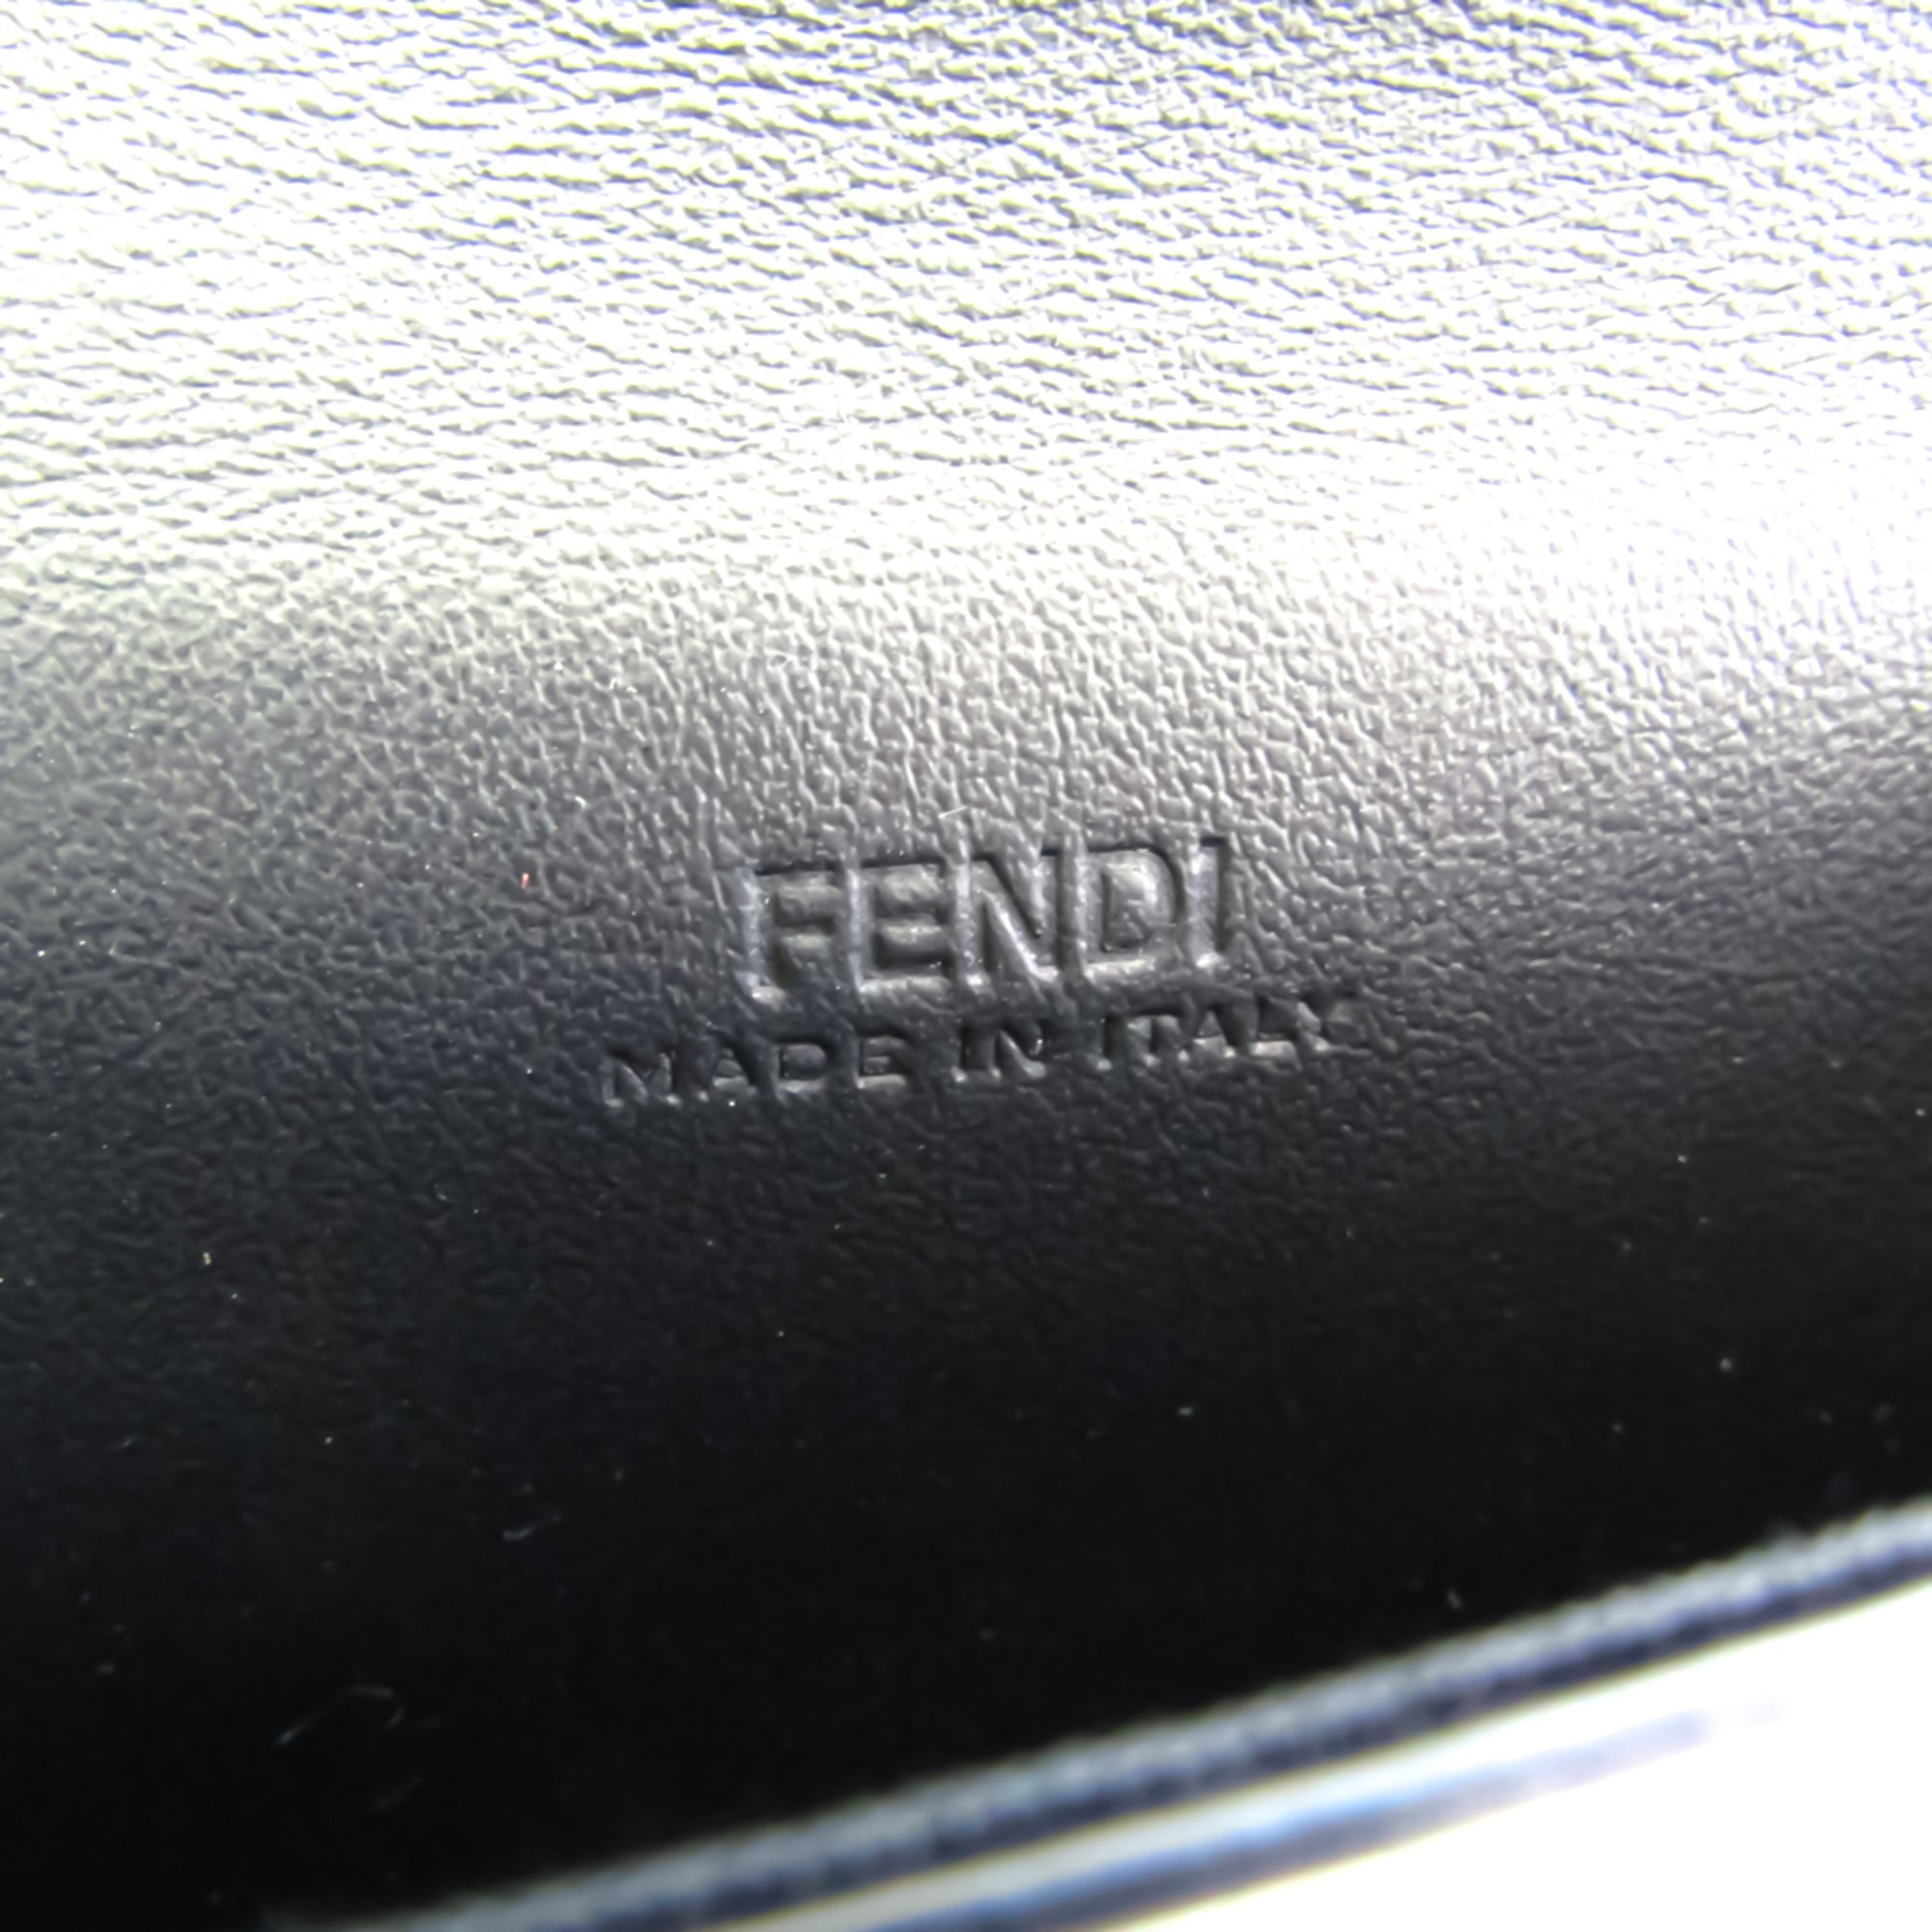 Fendi Leather Phone Rugged Case Black